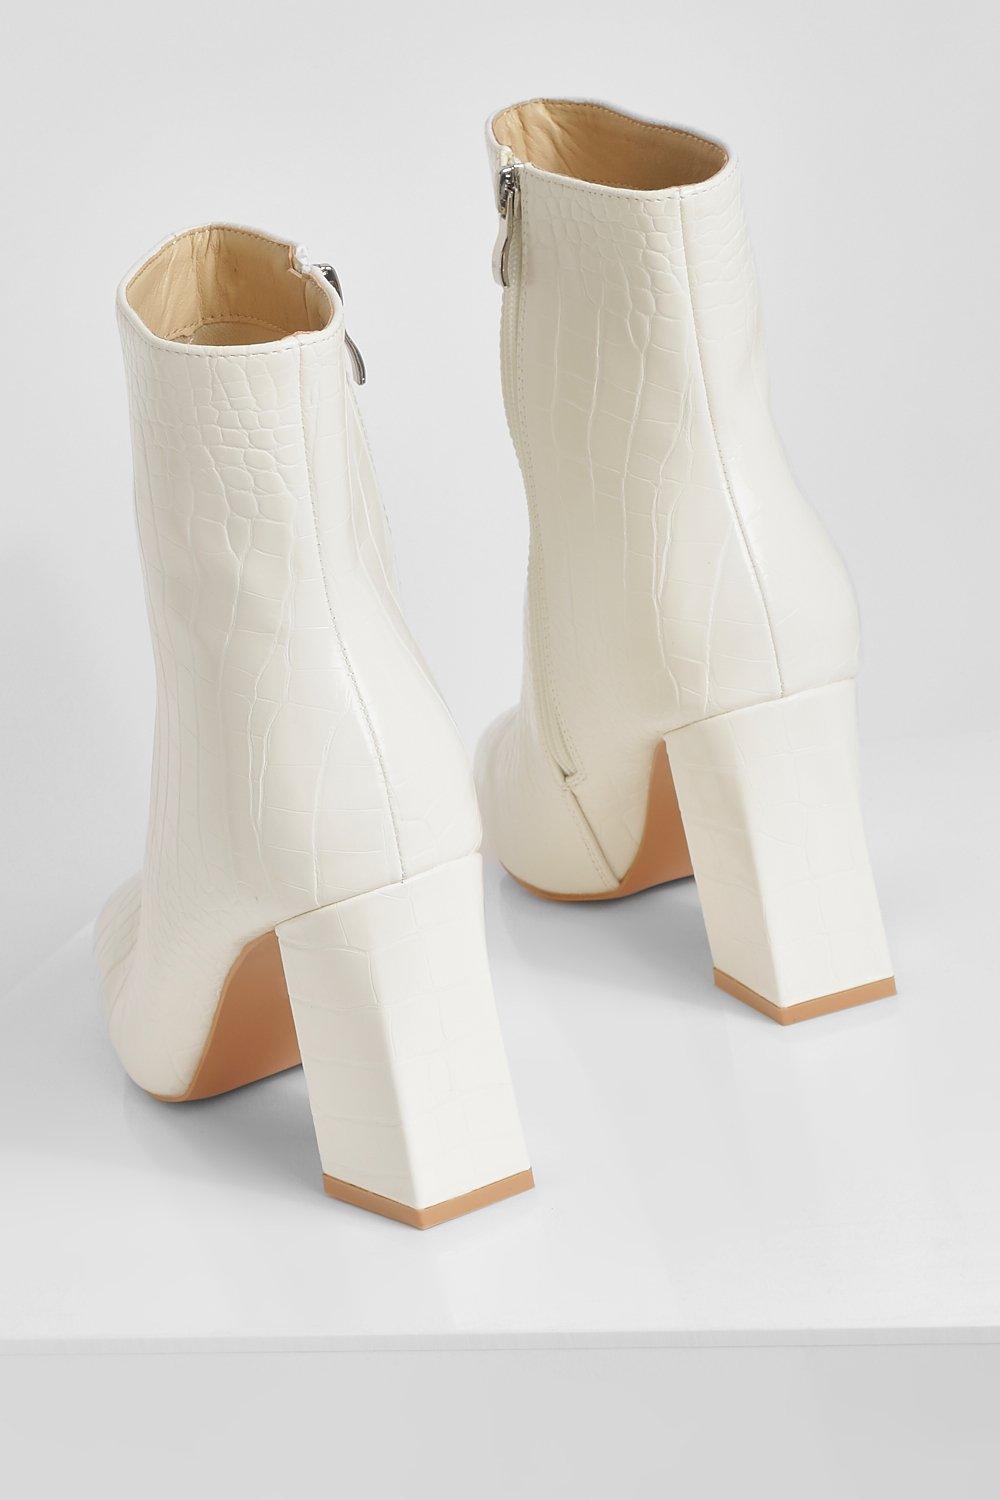 white crocodile heels